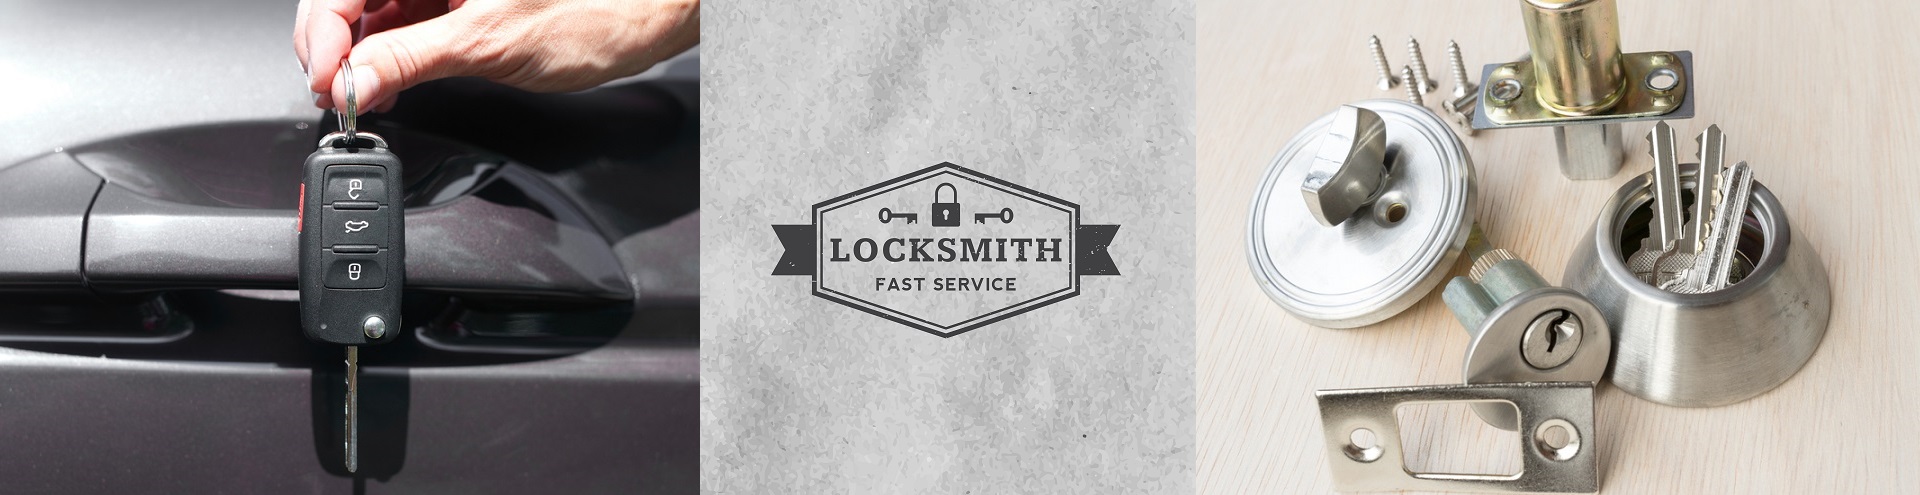 Boulder Locksmith